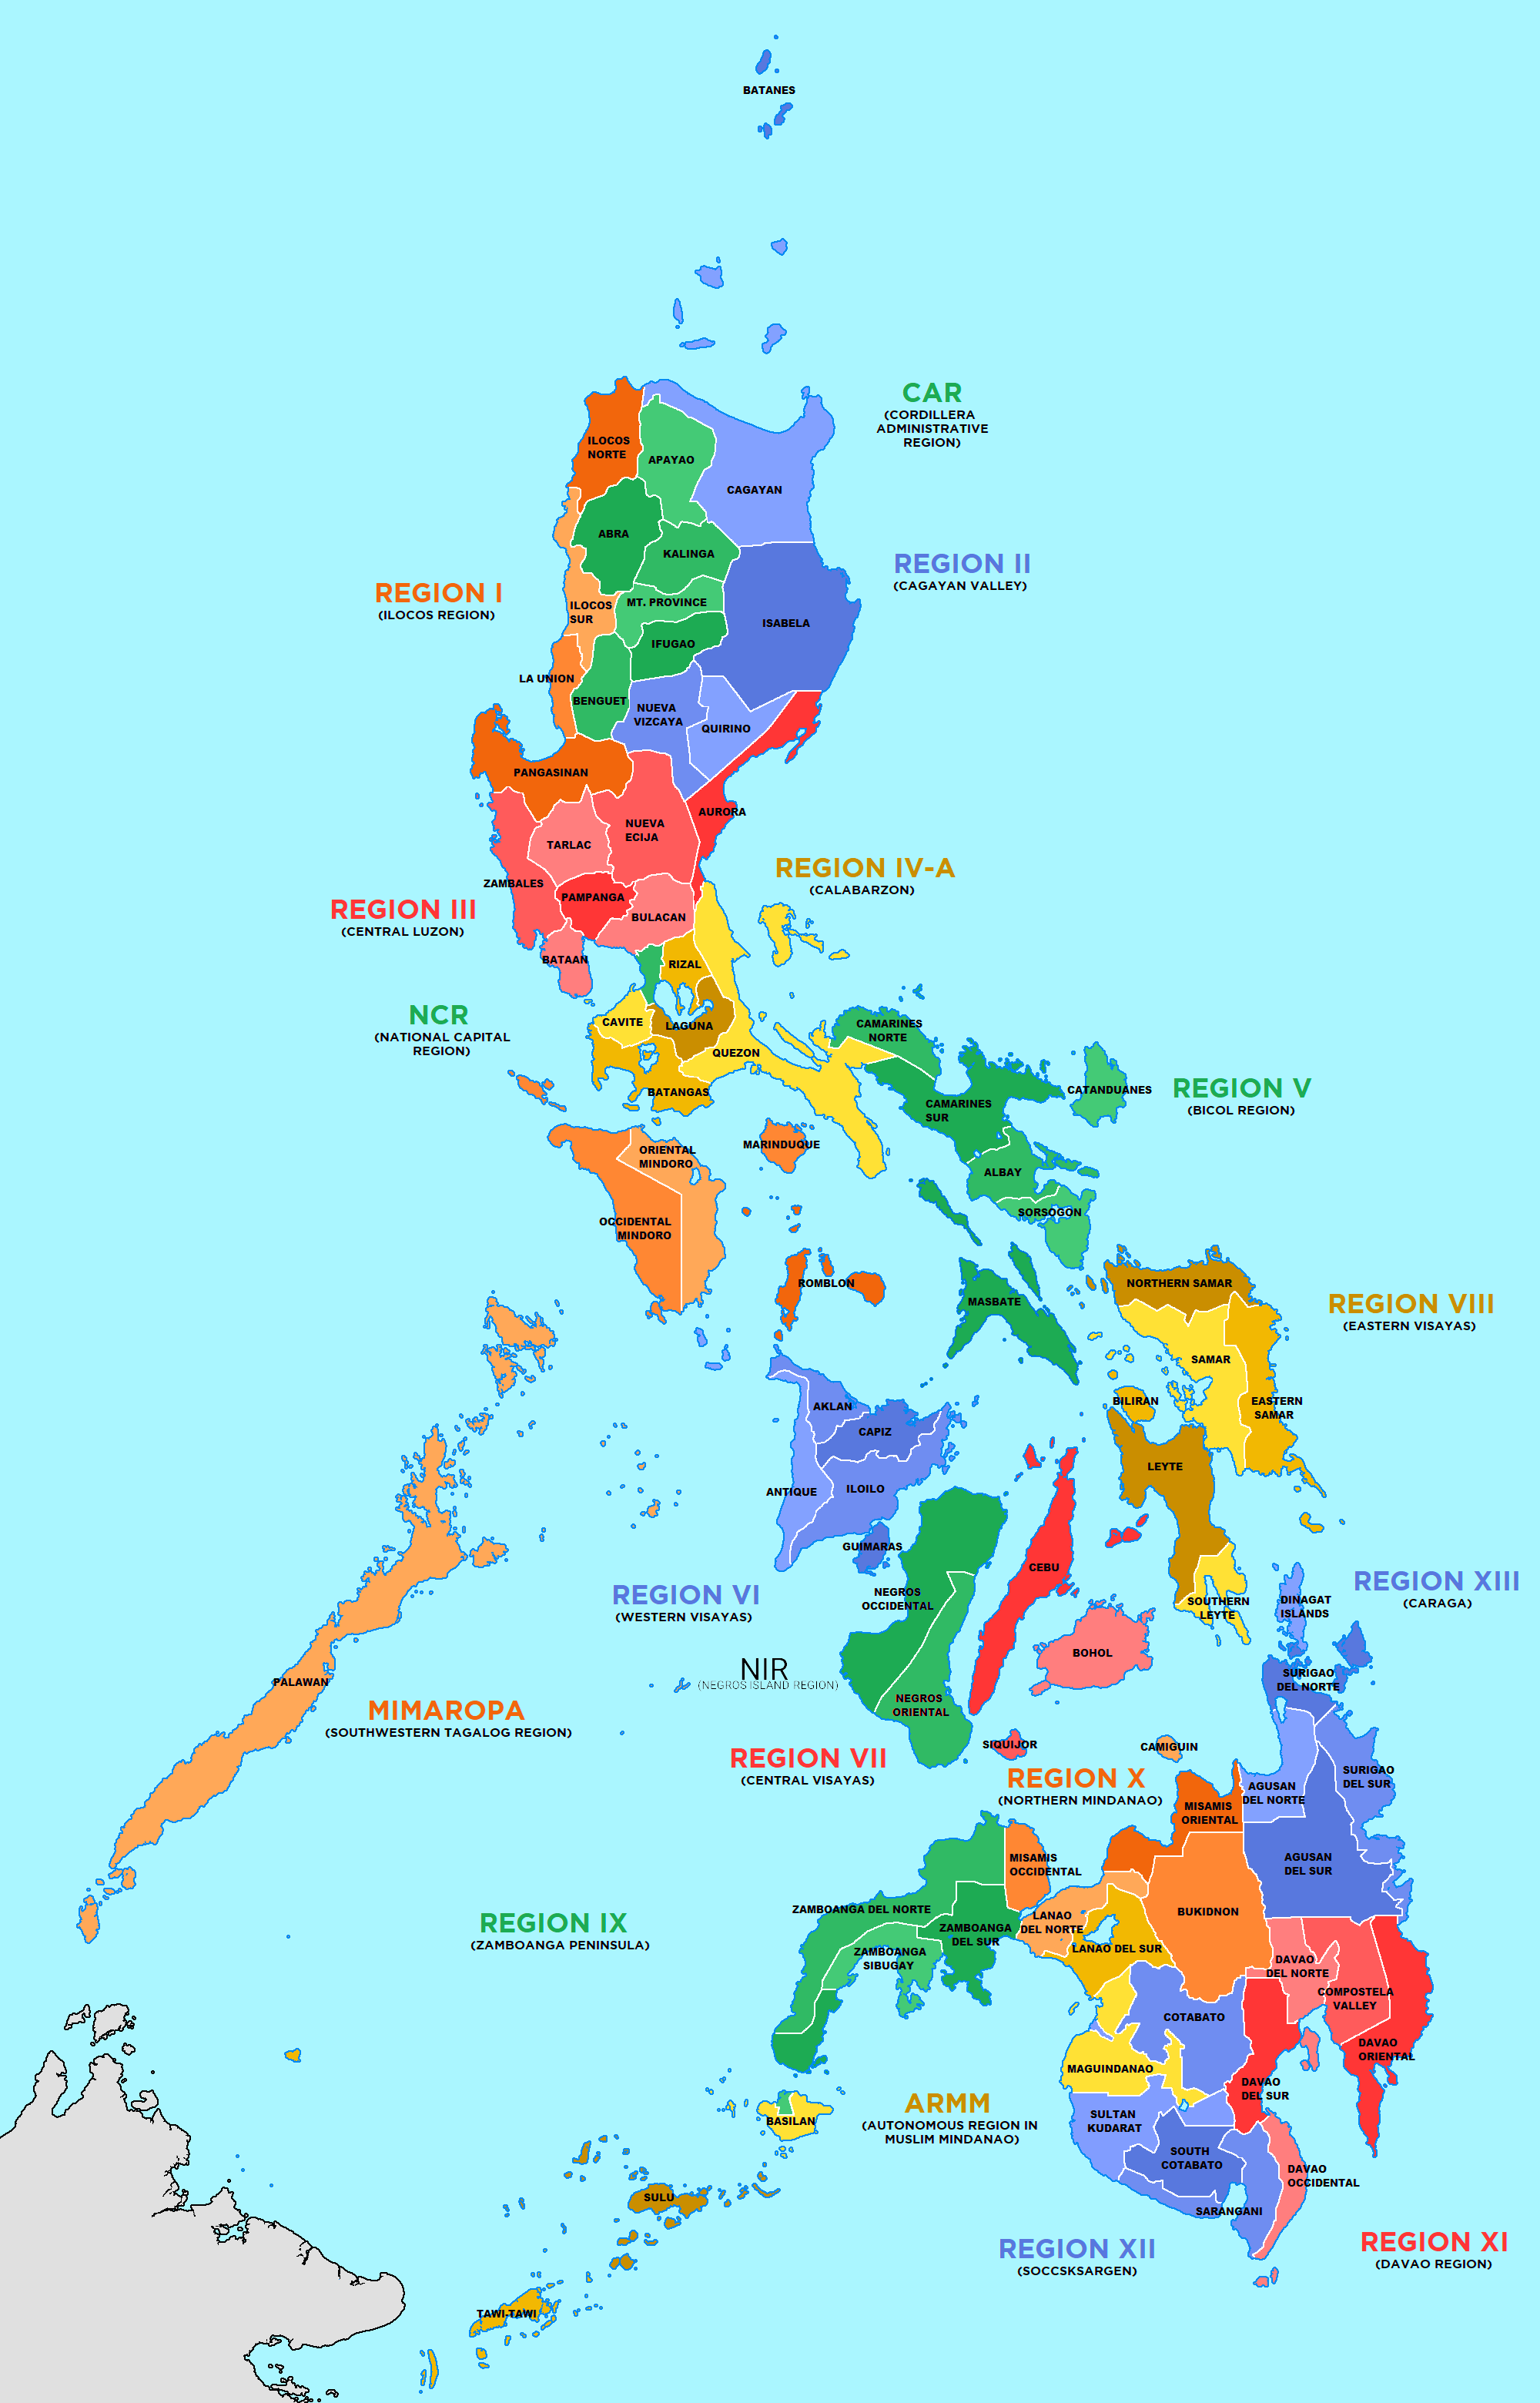 Philippines - regions and provinces • Map • PopulationData.net